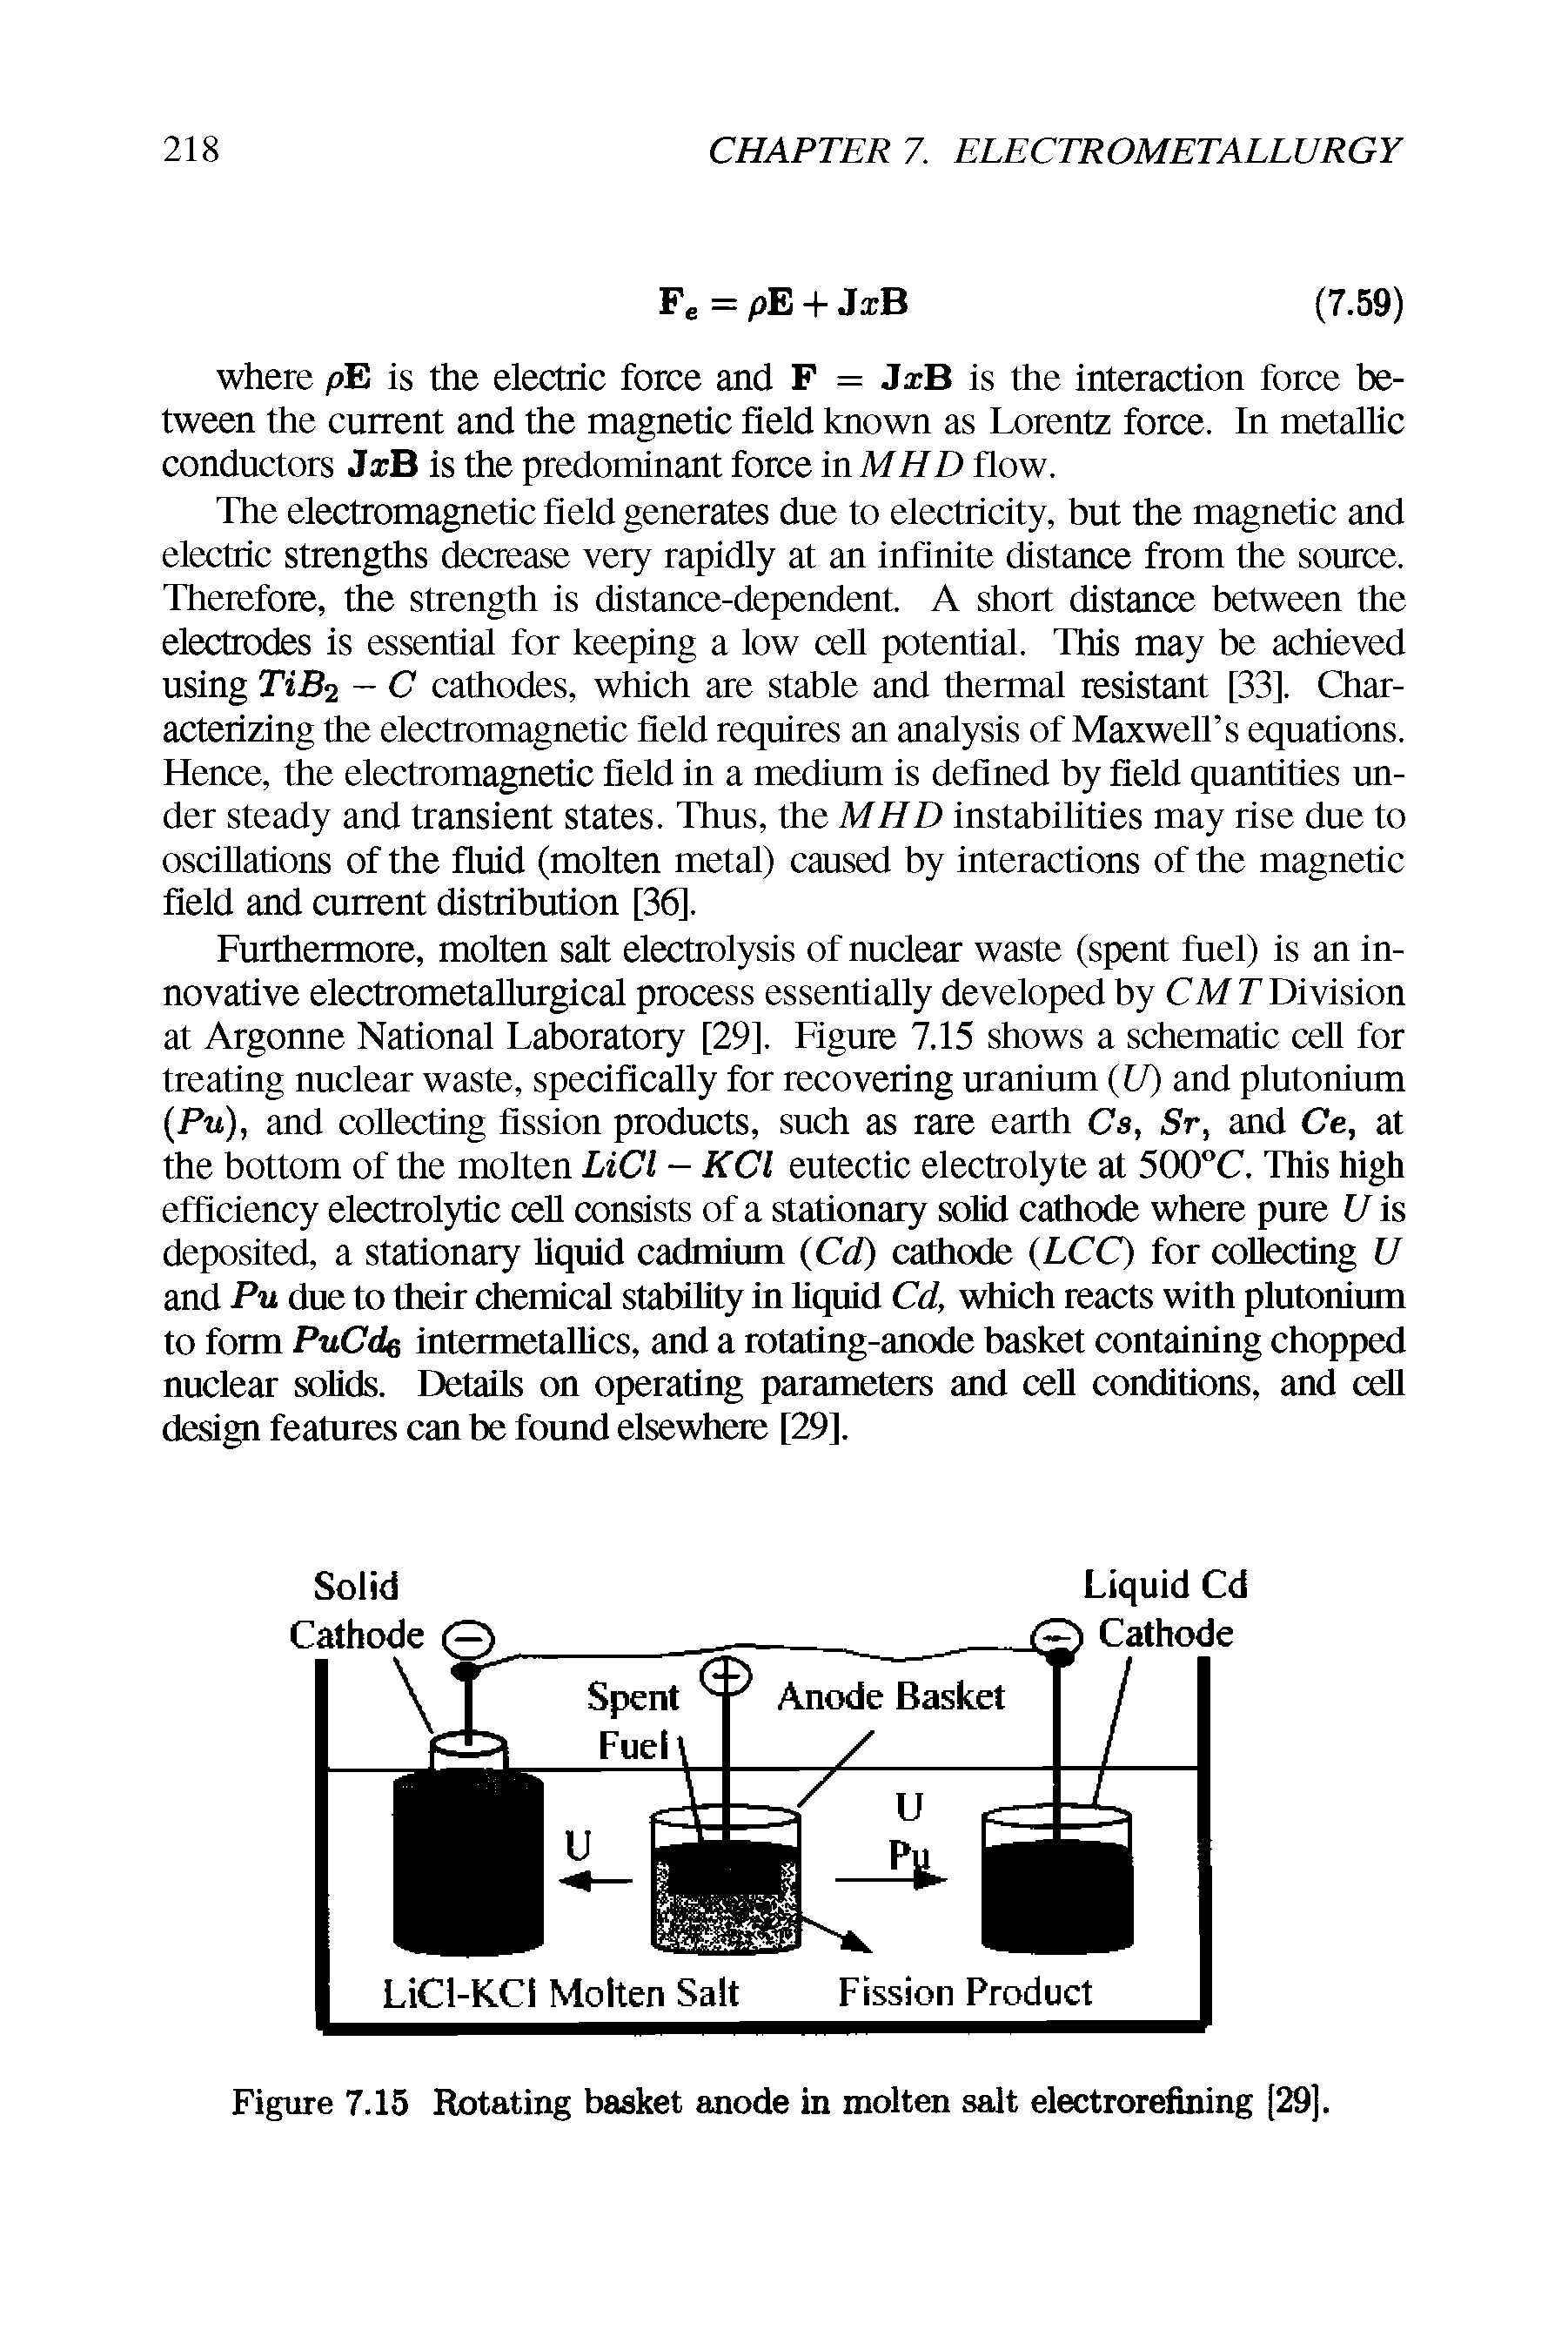 Figure 7.15 Plotating basket anode in molten salt electrorefining [29].